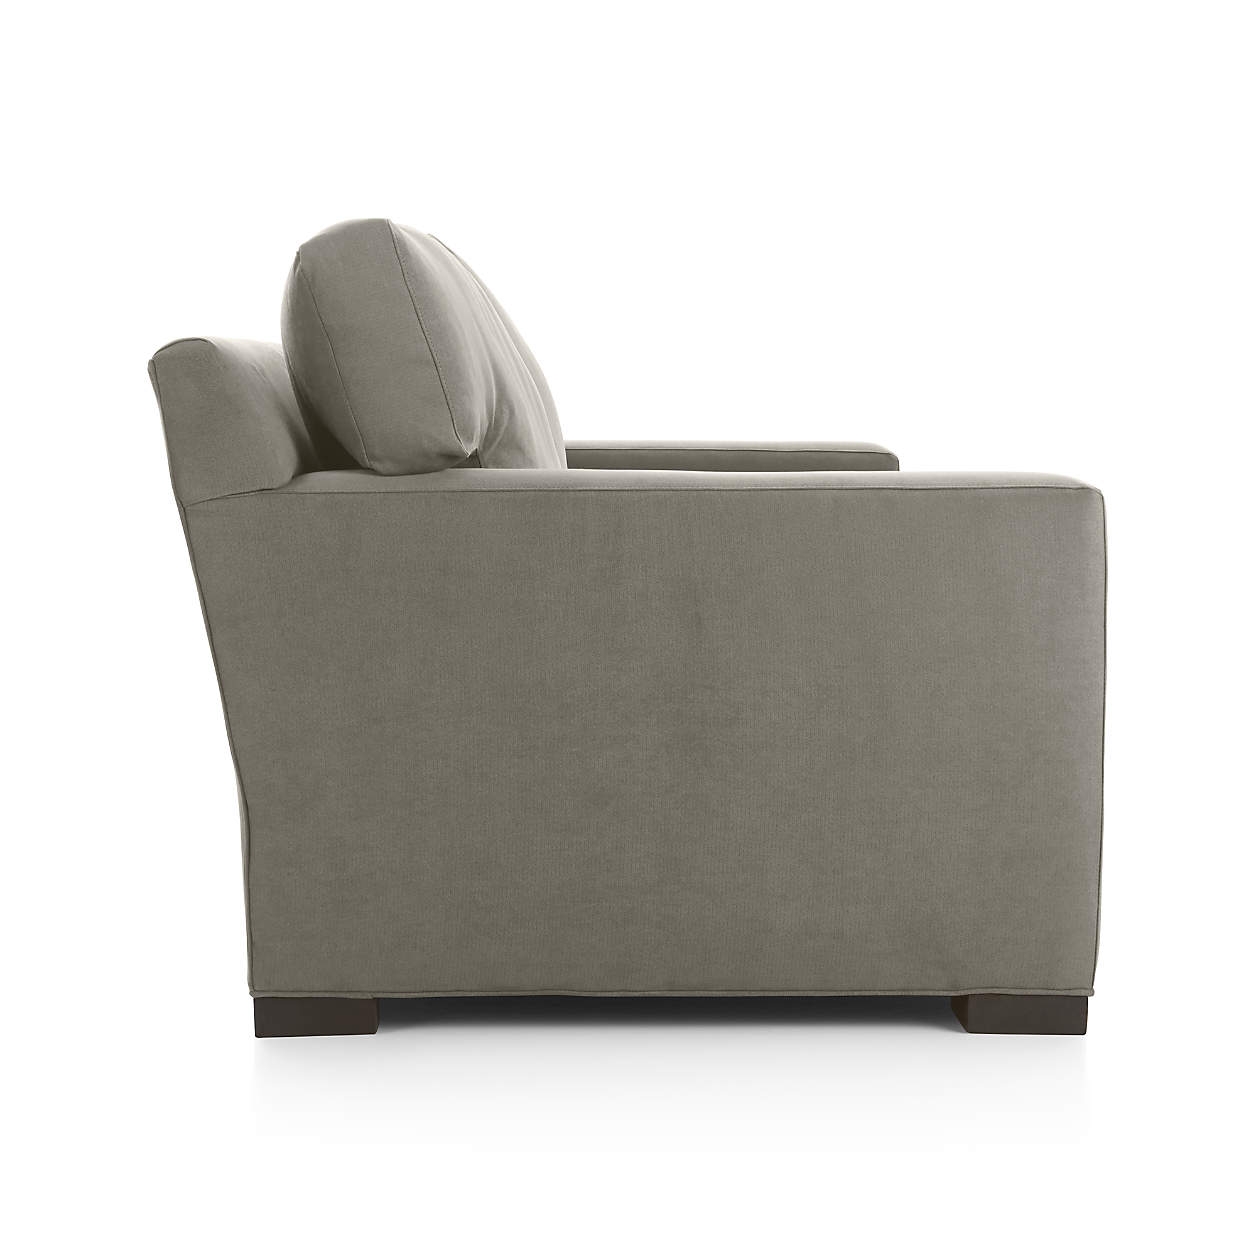 Axis II 3-Seat Sofa-LEG: Fossil - Image 1